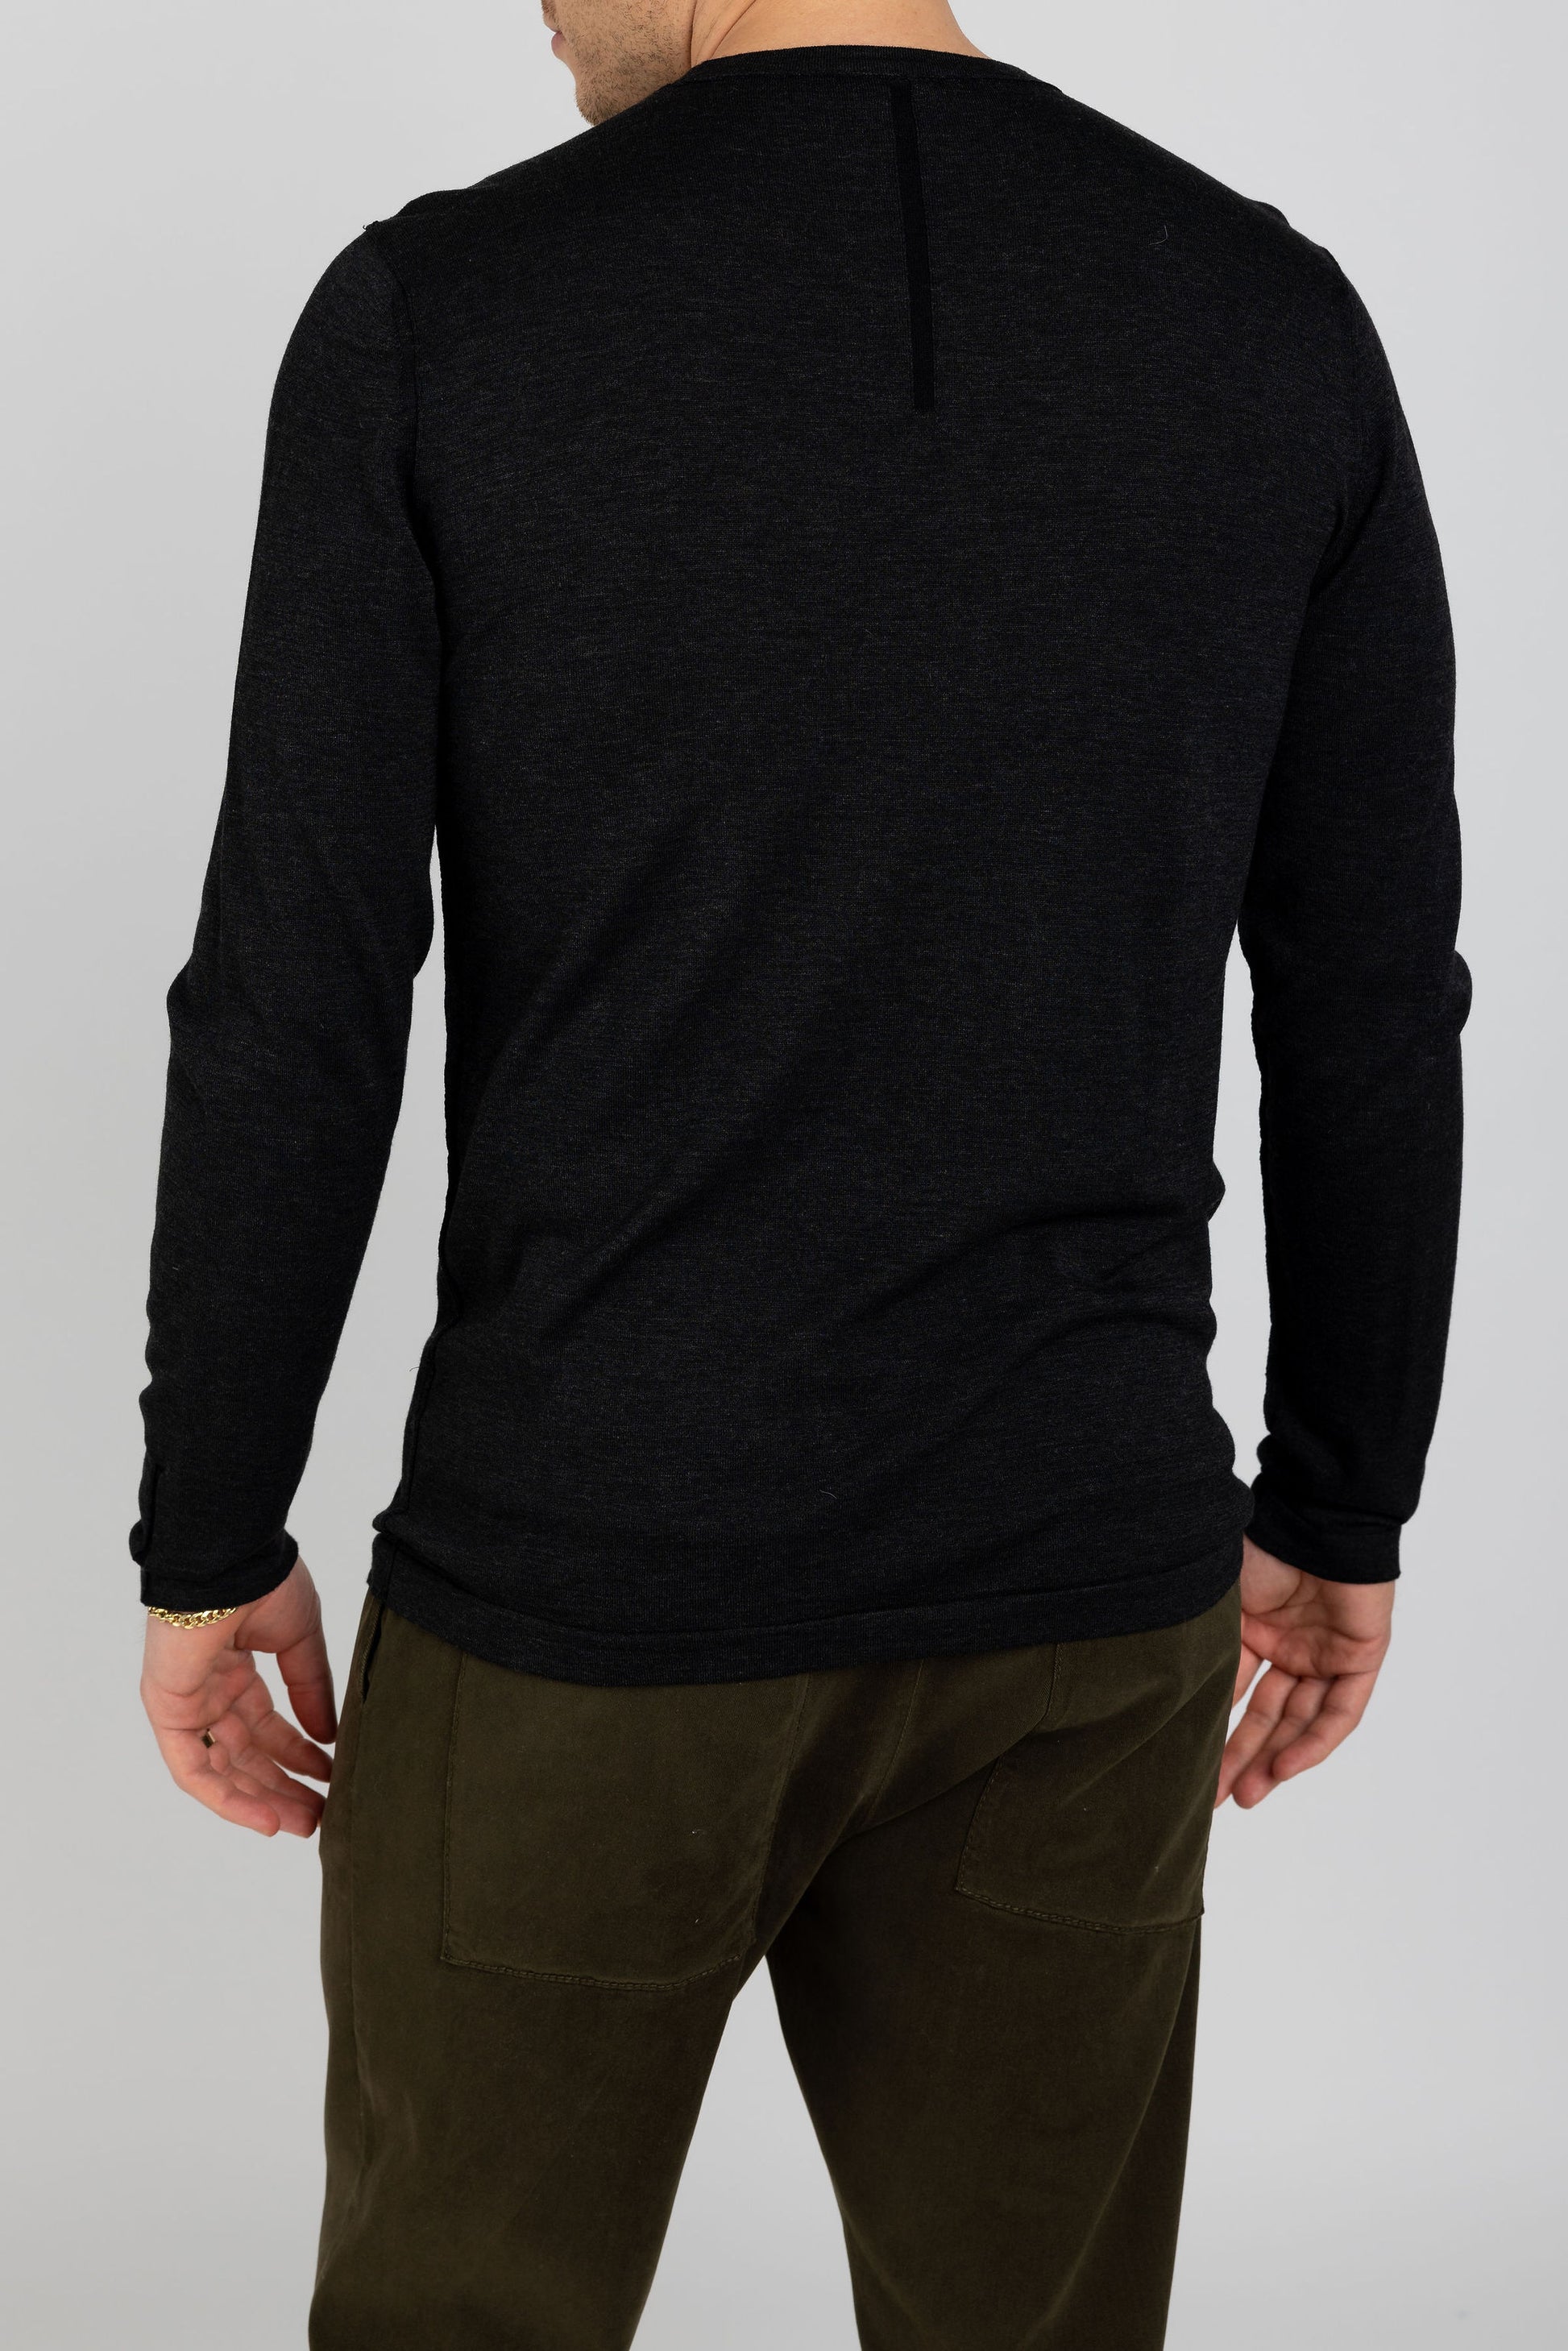 TRANSIT Crewneck Sweater in Grey Black